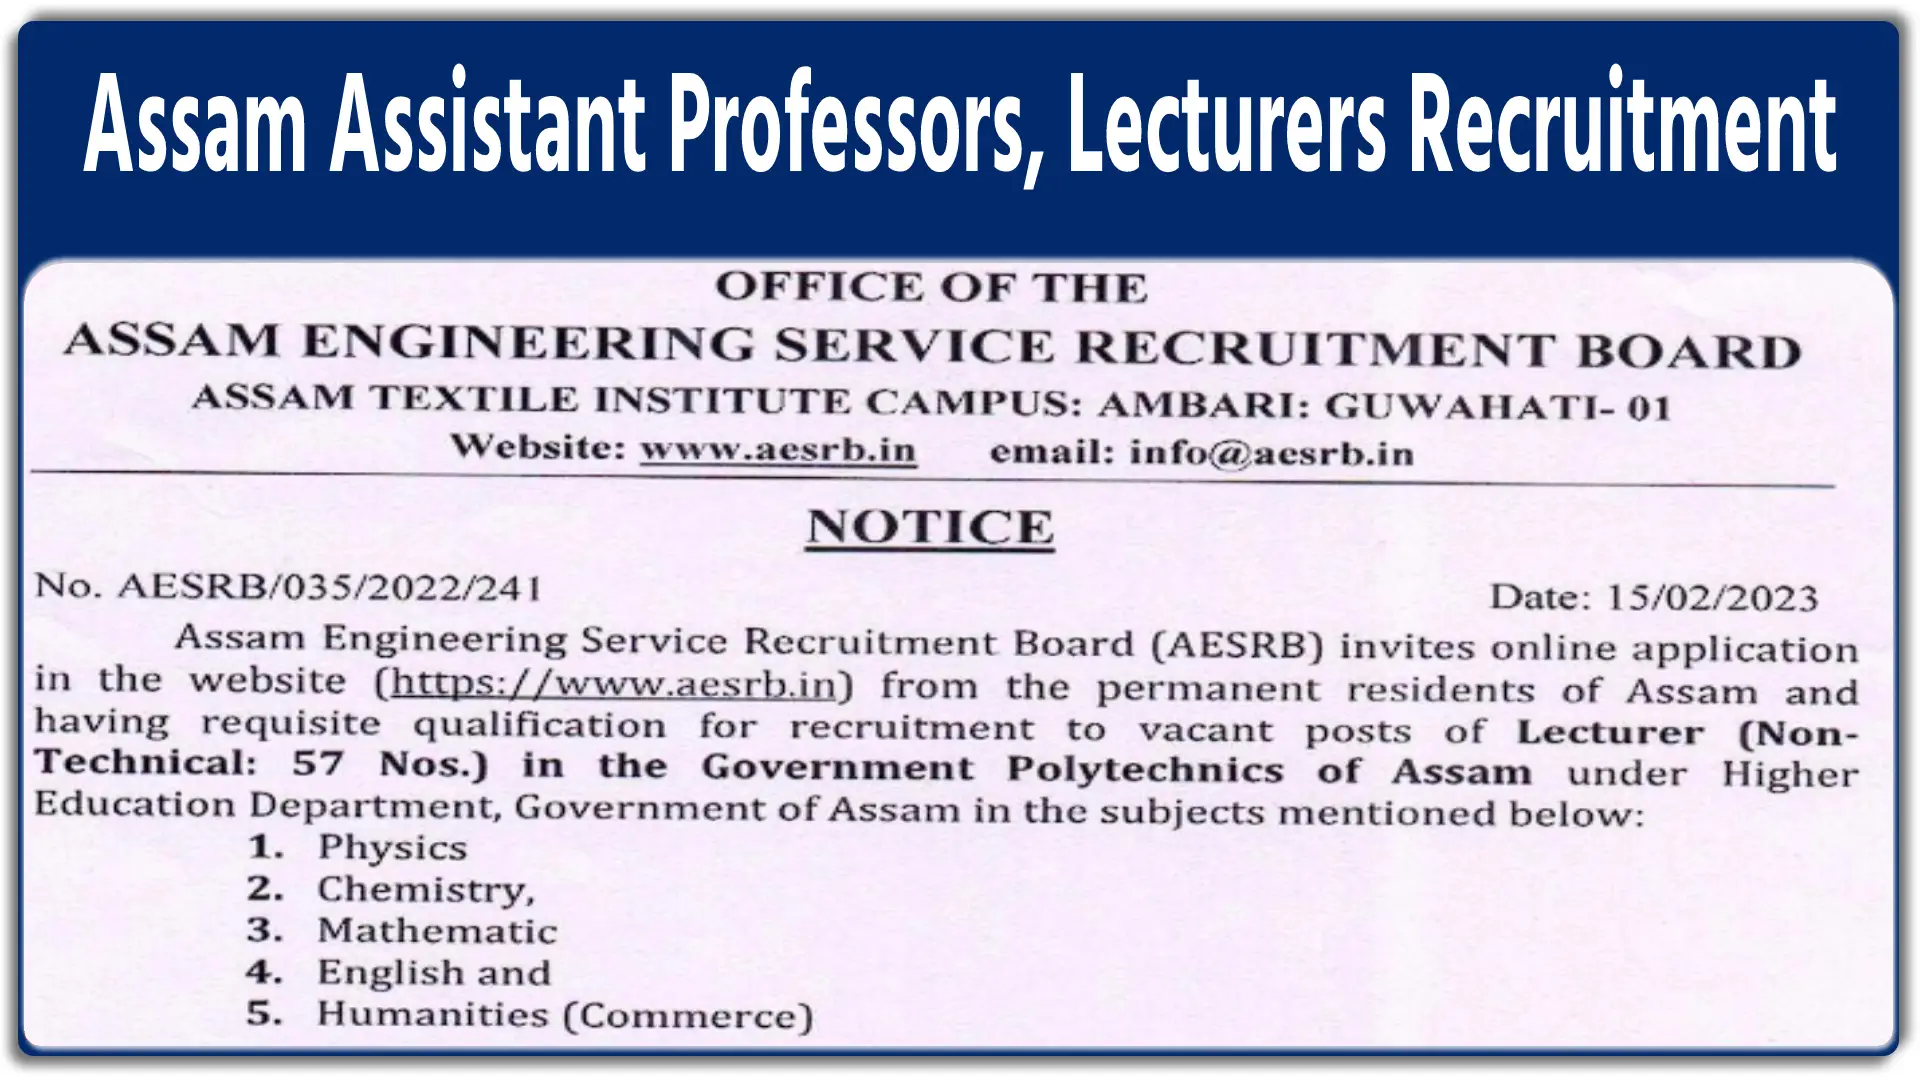 Assam Assistant Professors and Lecturers Recruitment